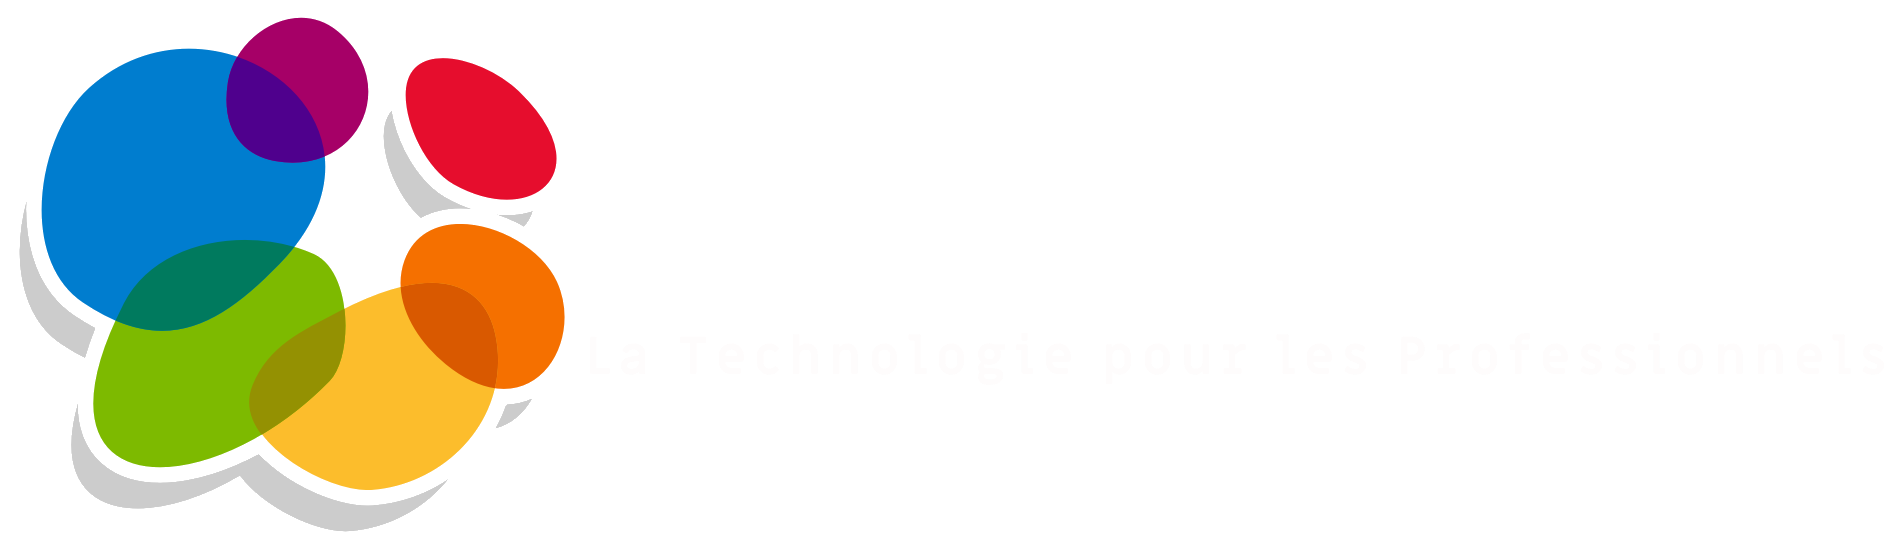 mks-soft-technologies